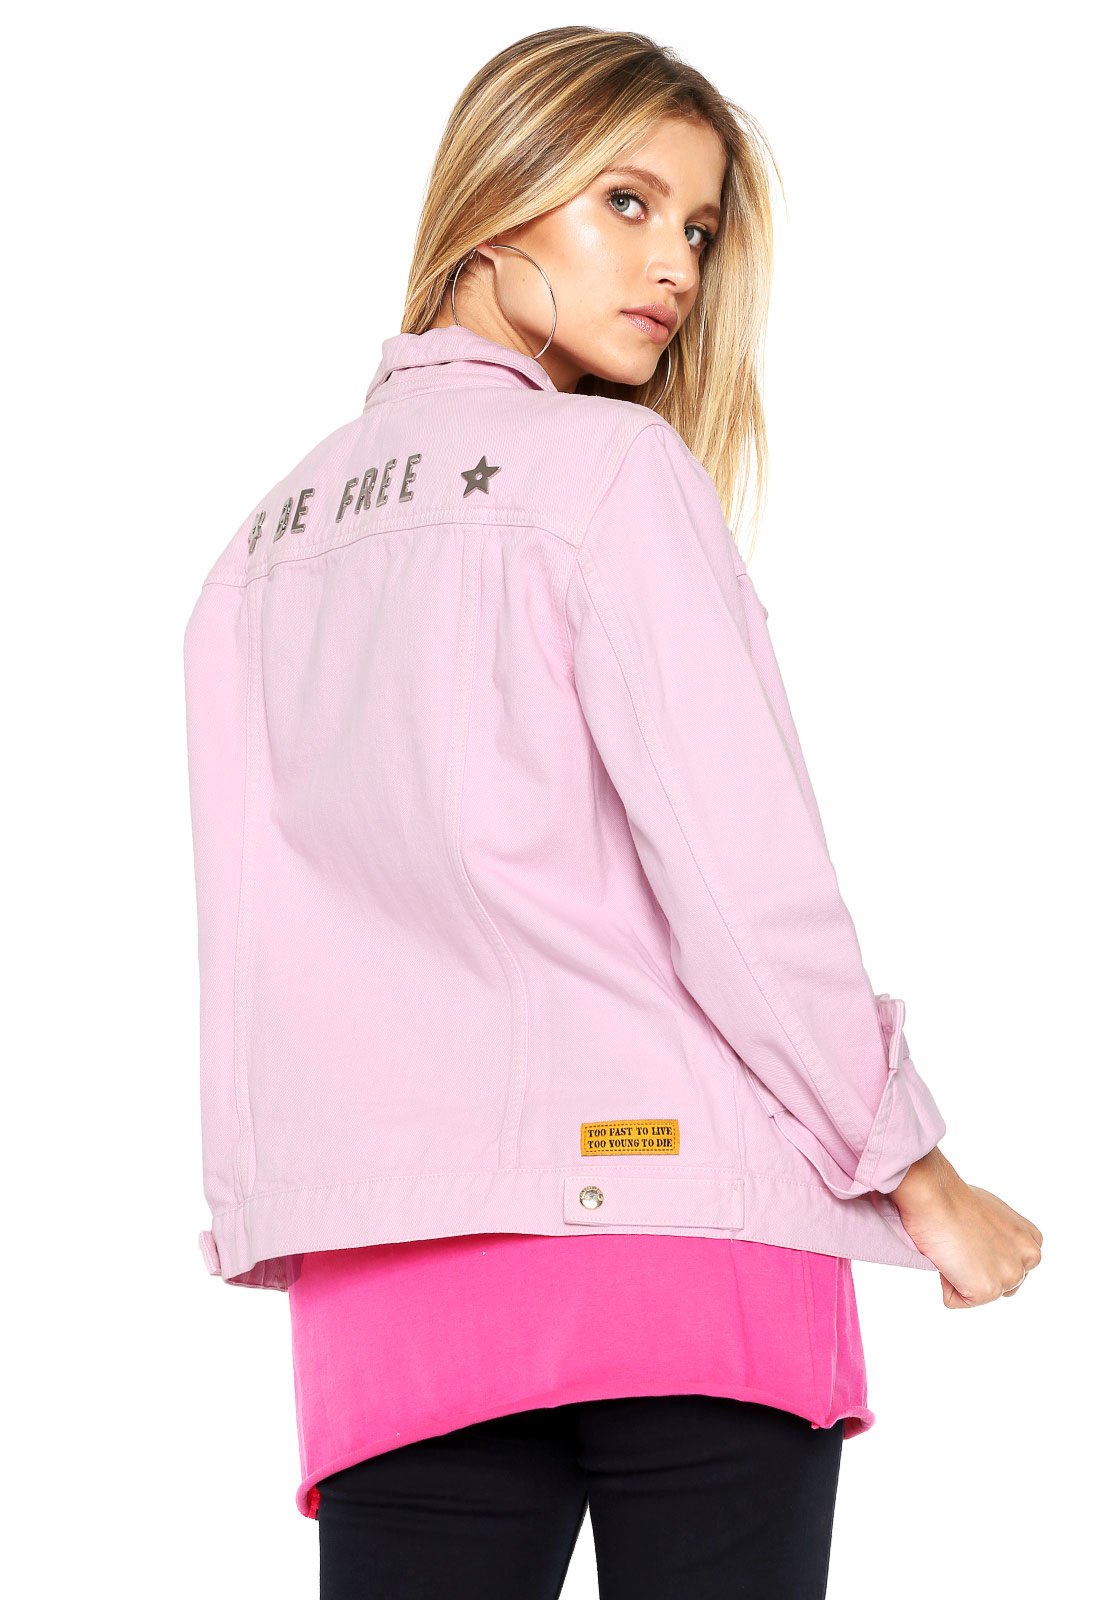 jaqueta sarja rosa